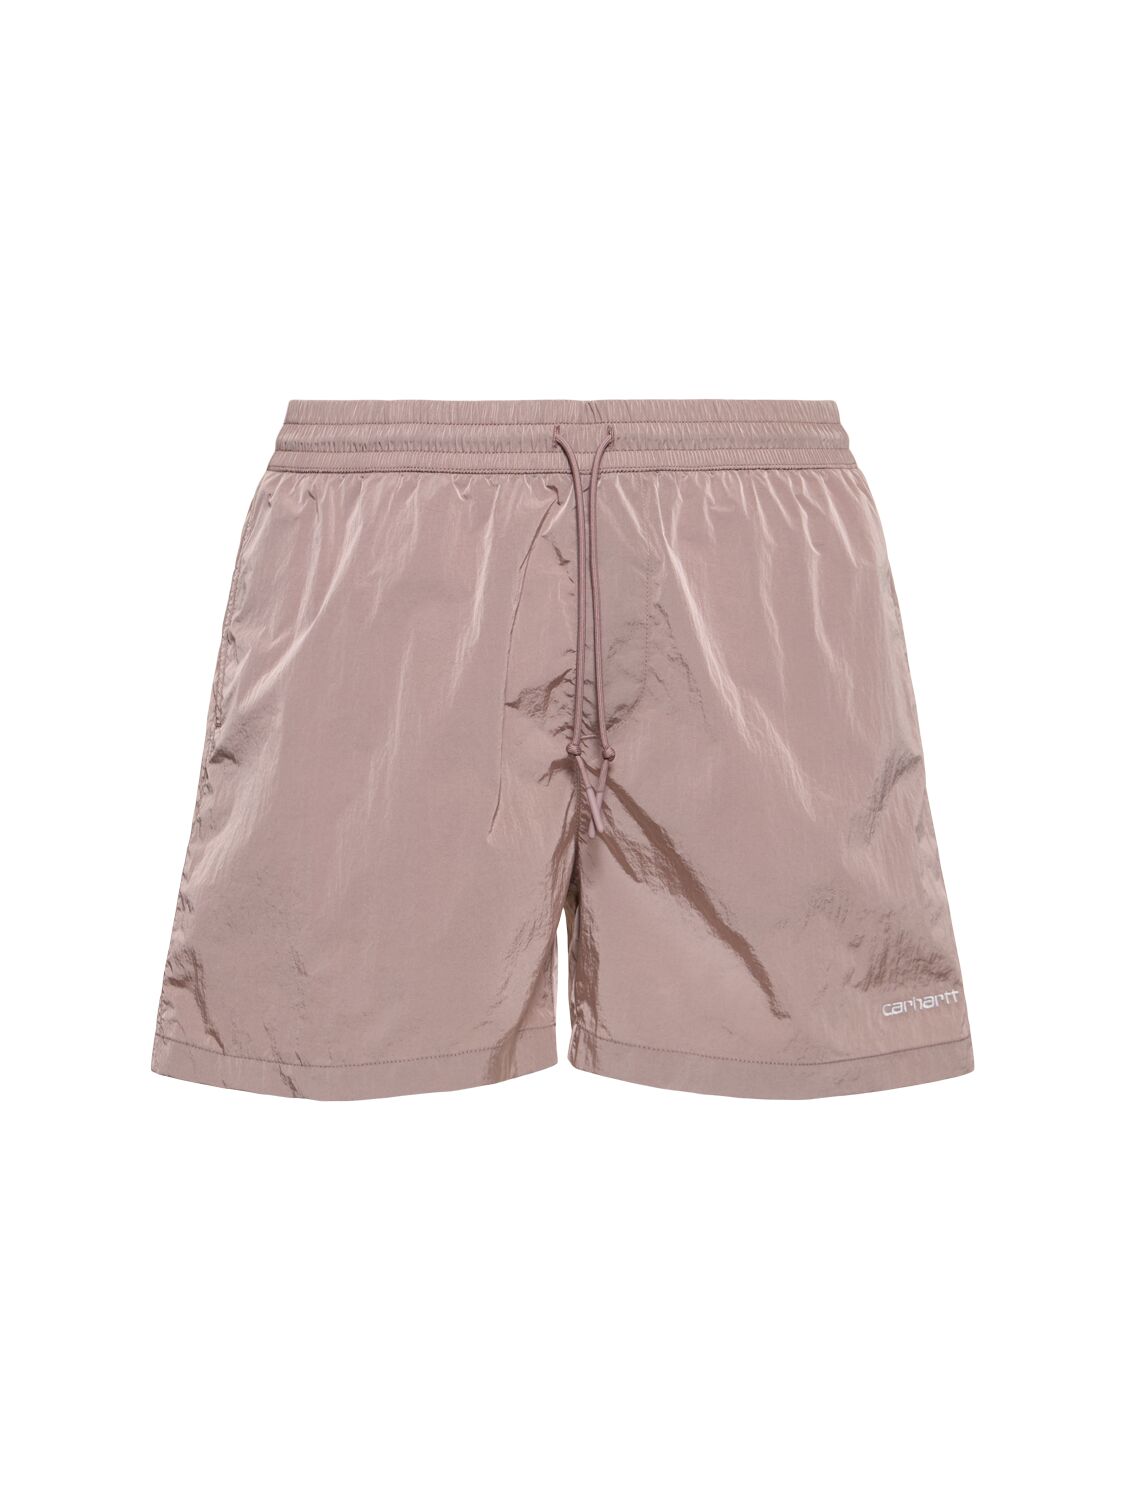 Shop Carhartt Tobes Swim Shorts In Glassy Pink